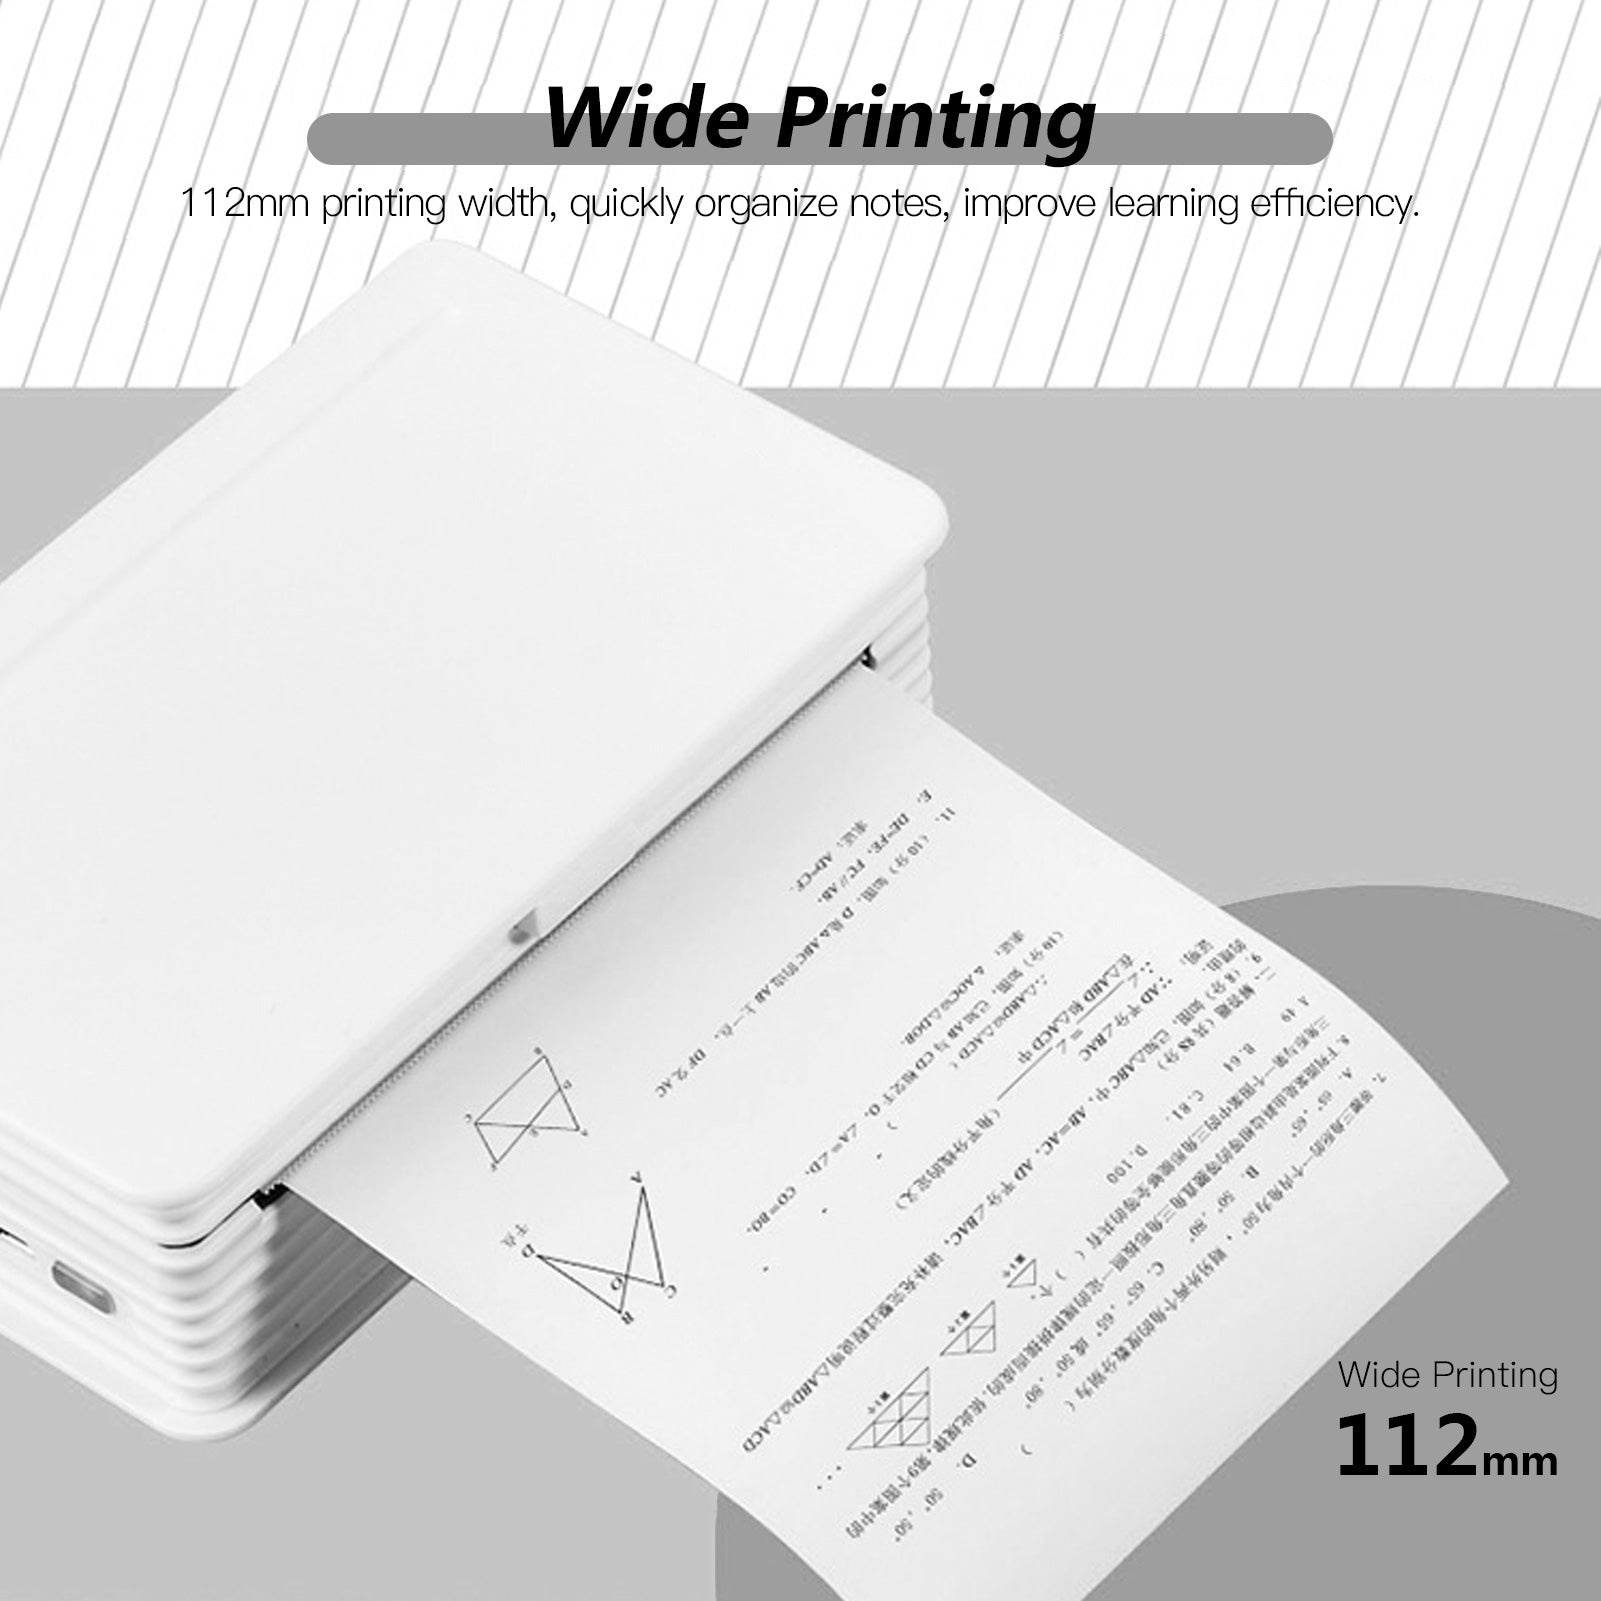 112mm Portable BT Thermal Printer Mobile Printer 300dpi for Photo Receipt Memo Note Label Sticker